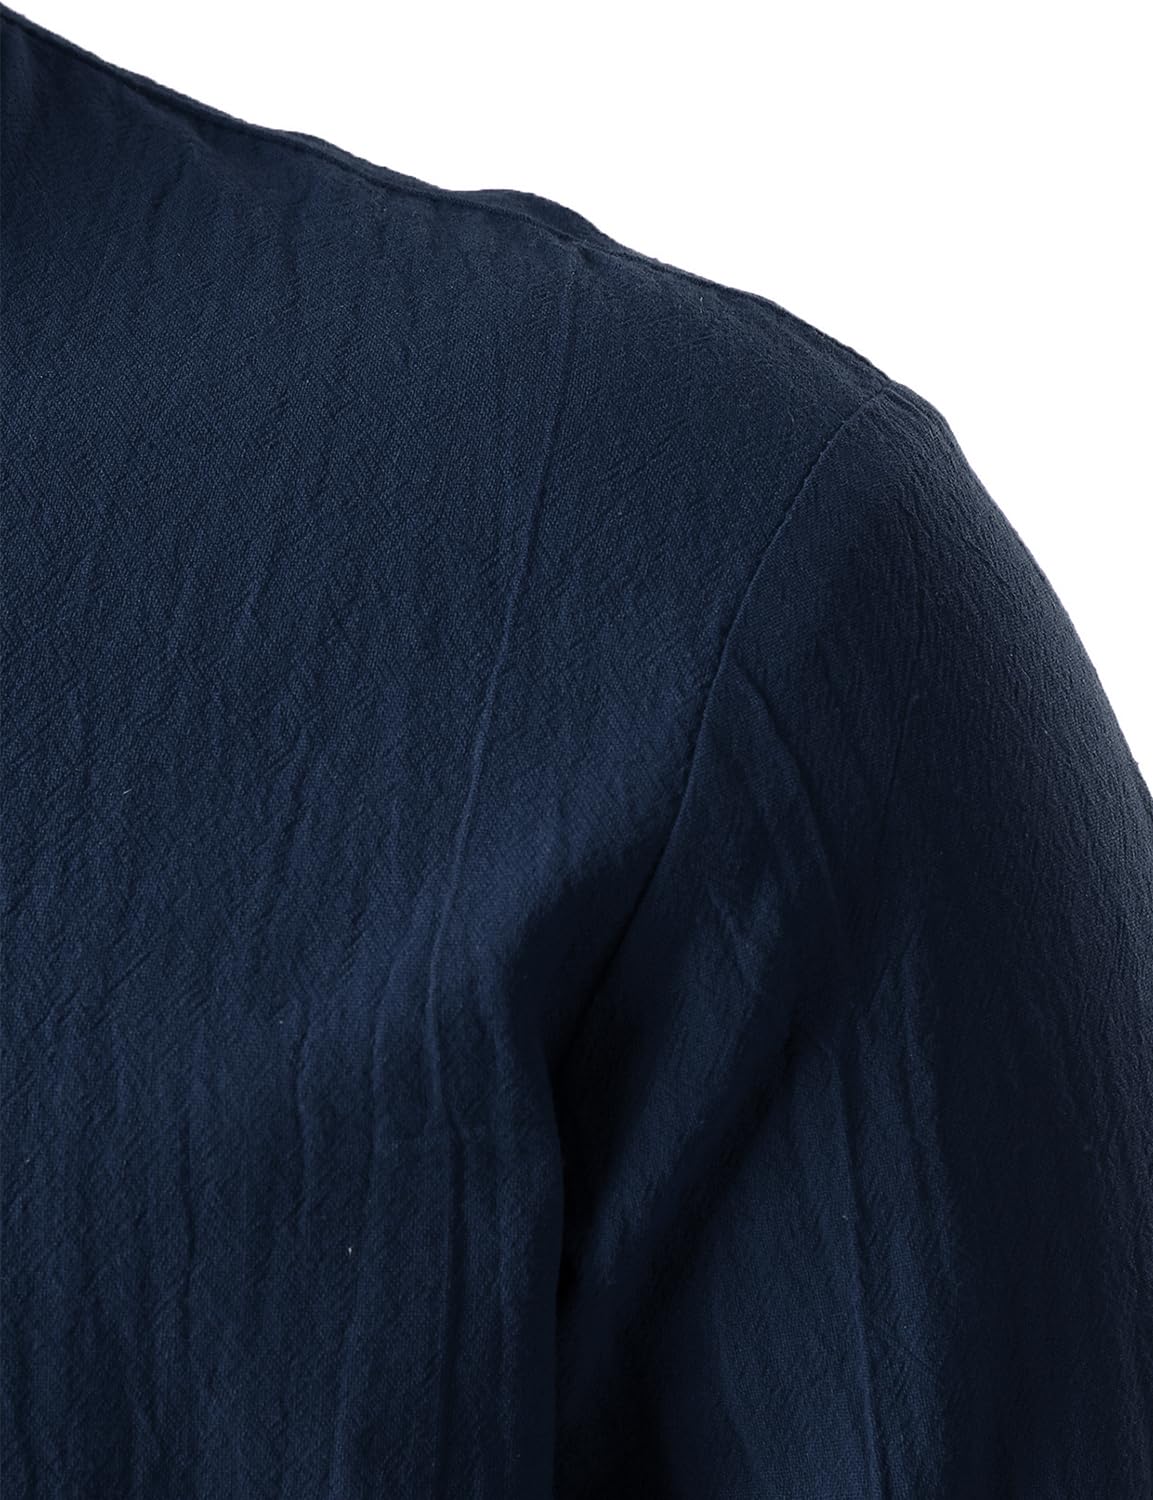 Men's Medieval Vintage Long Sleeve Lace Up Shirt